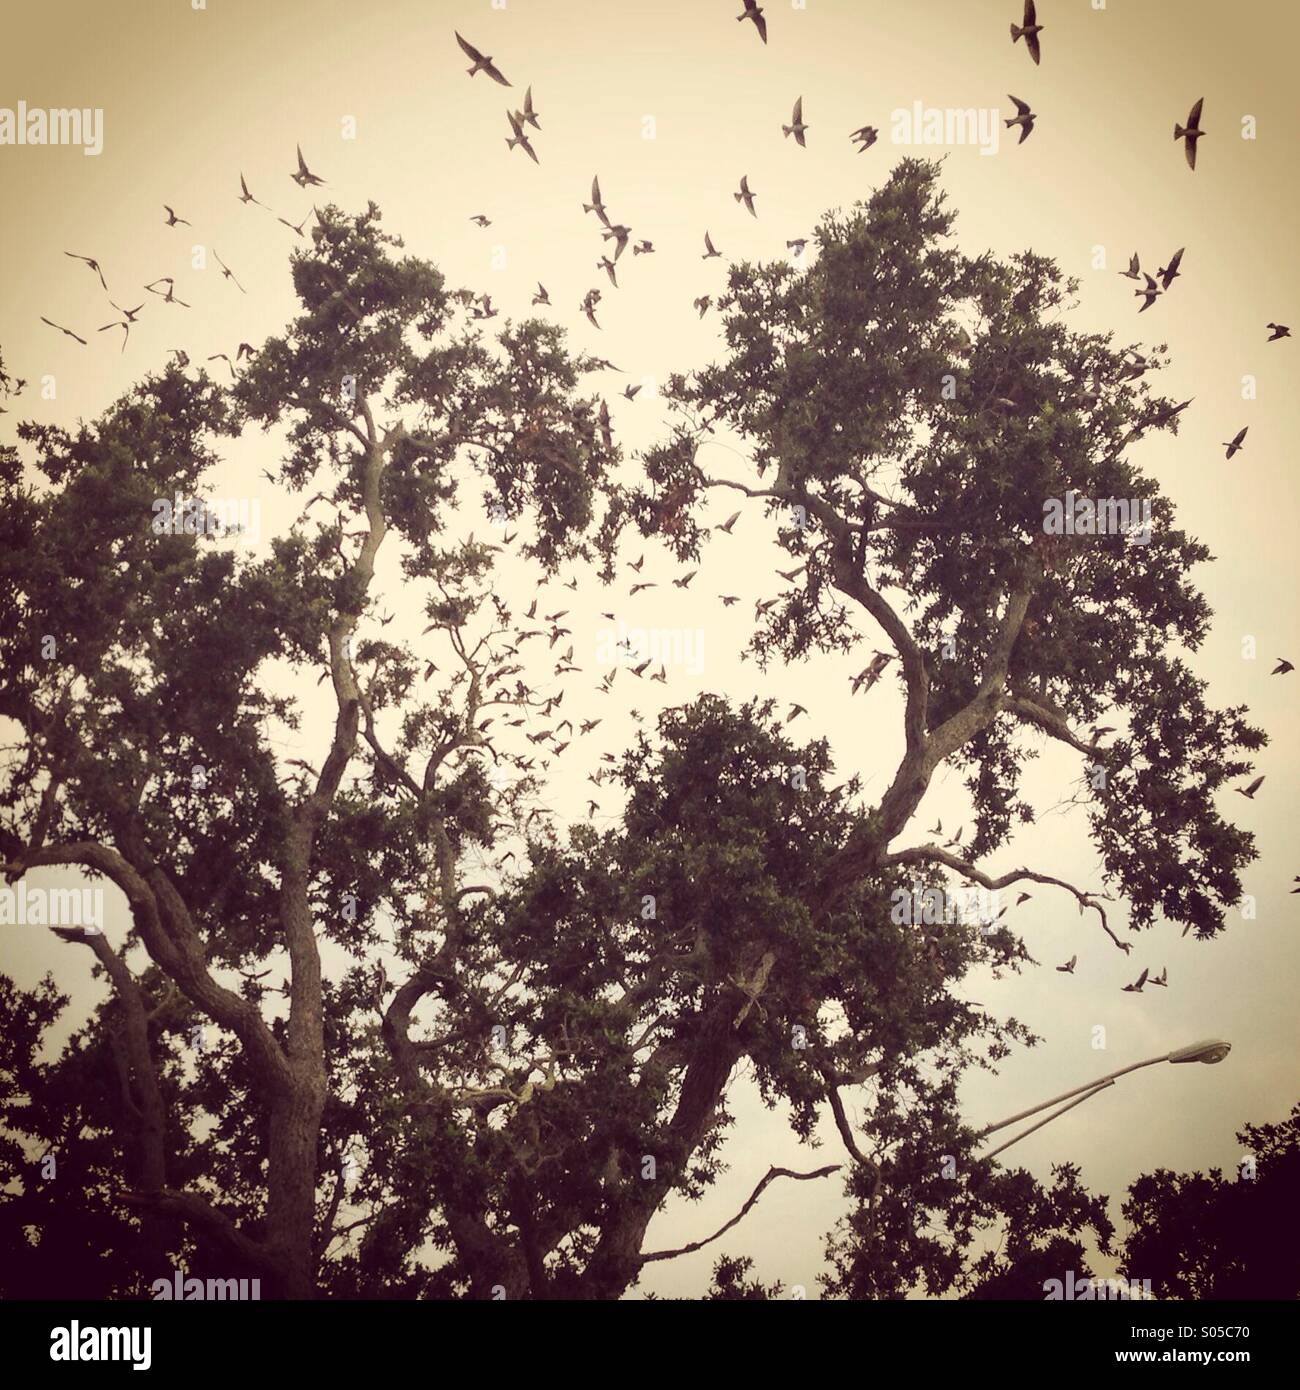 Birds swarming around a tree. Stock Photo